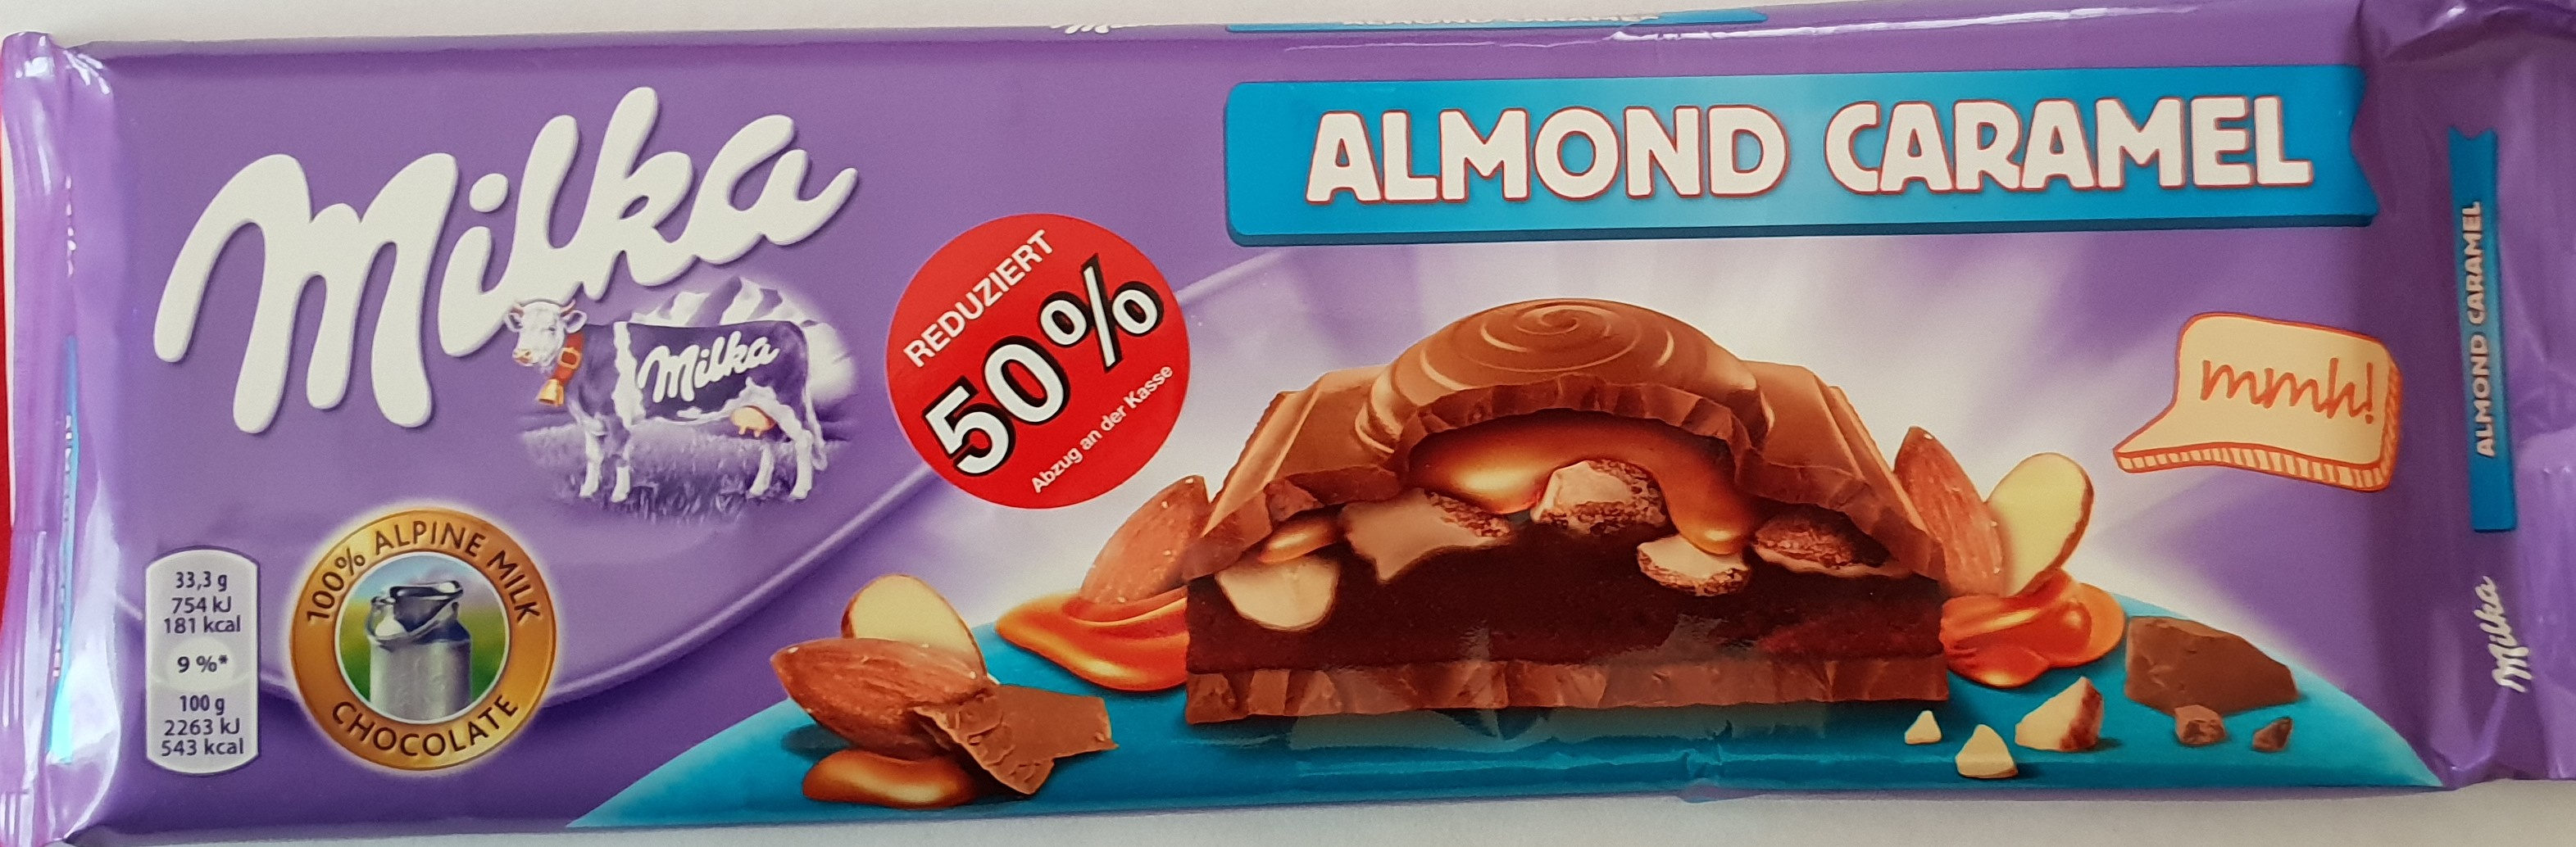 Almond Caramel mmh! - Product - de